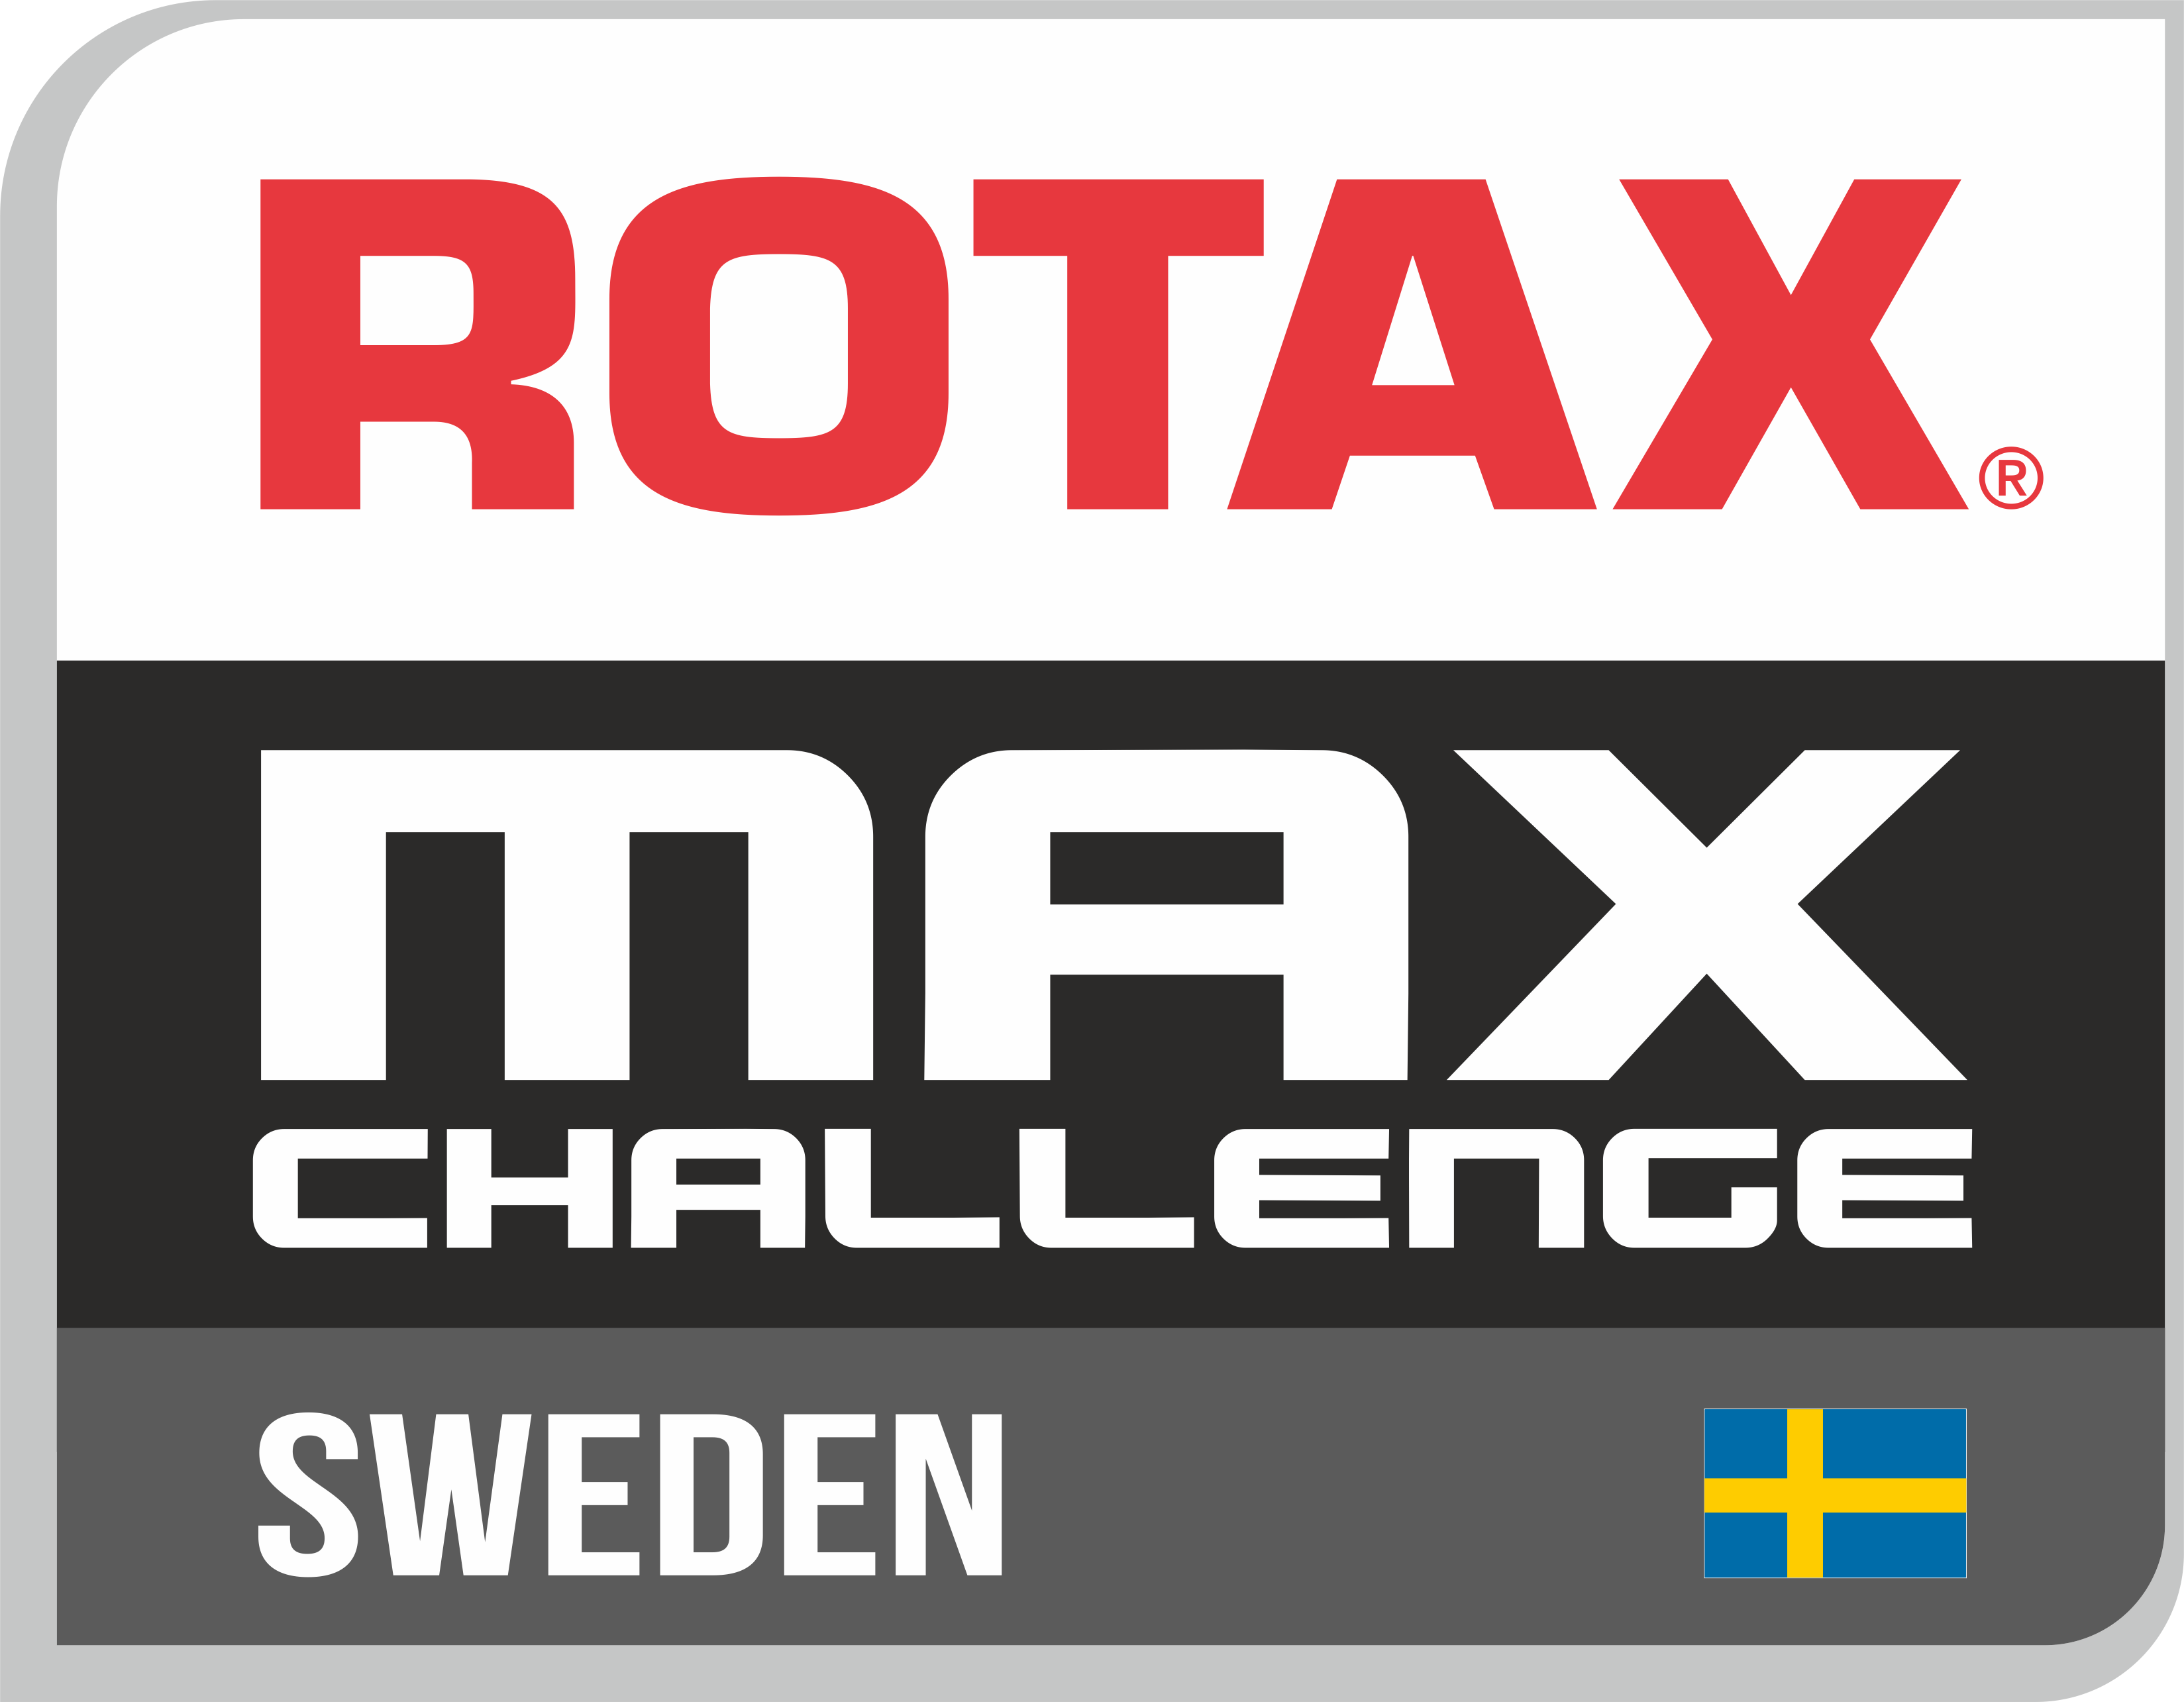 Rotax Max Challenge Sverige logo for download in vector format